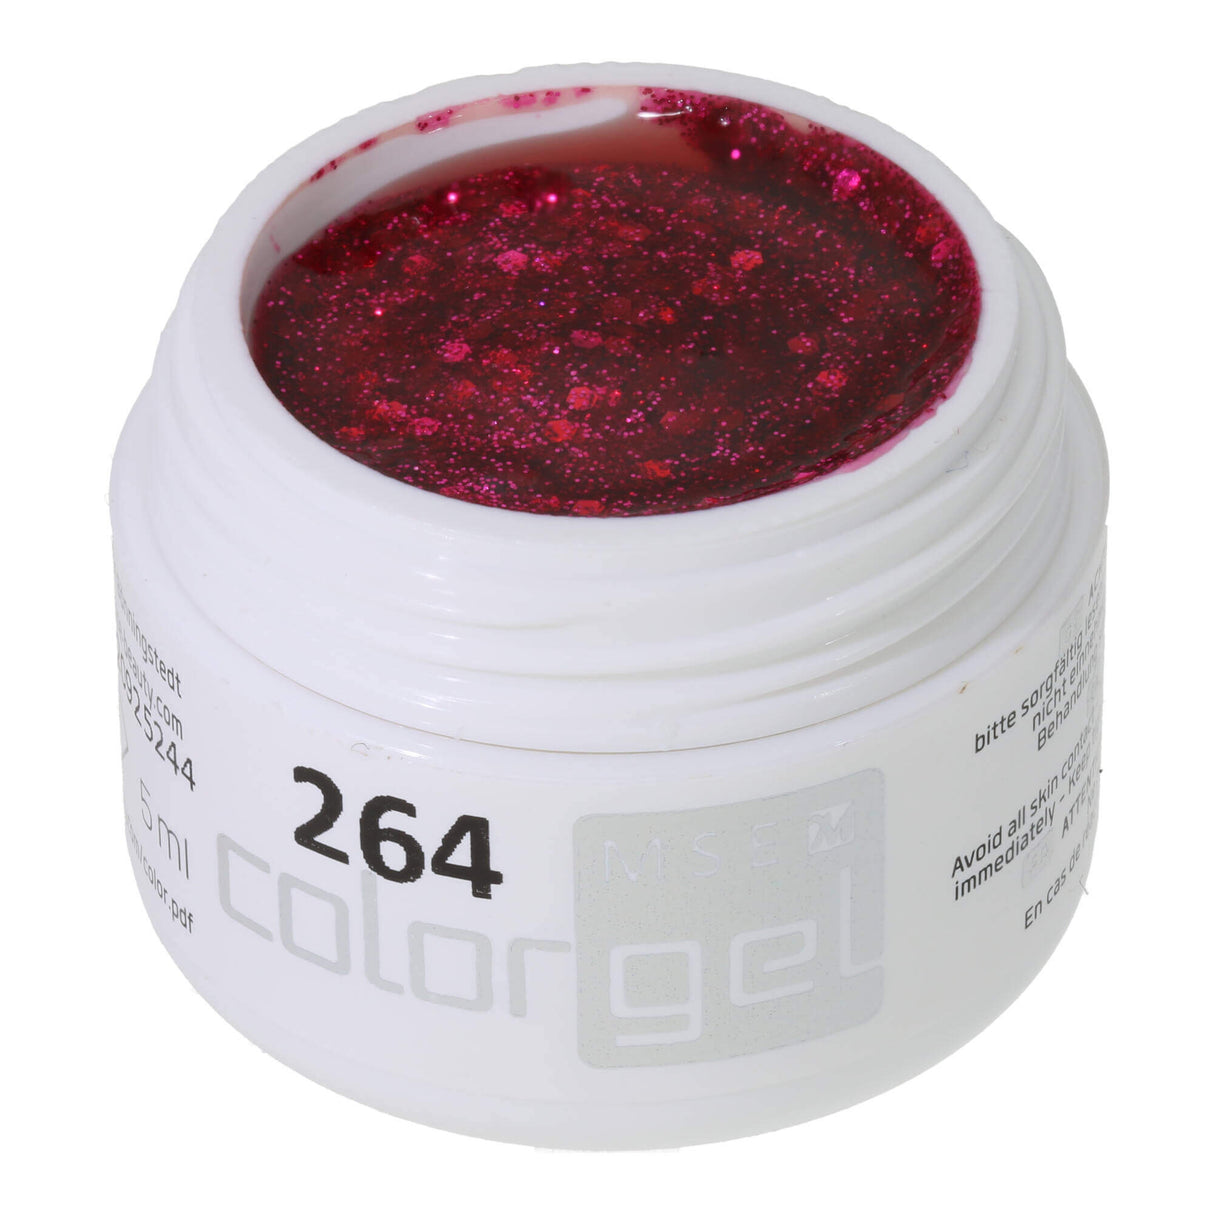 # 264 Premium-GLITTER Color Gel 5ml Pink-colored gel with pink-colored glitter and large, light-red glitter particles